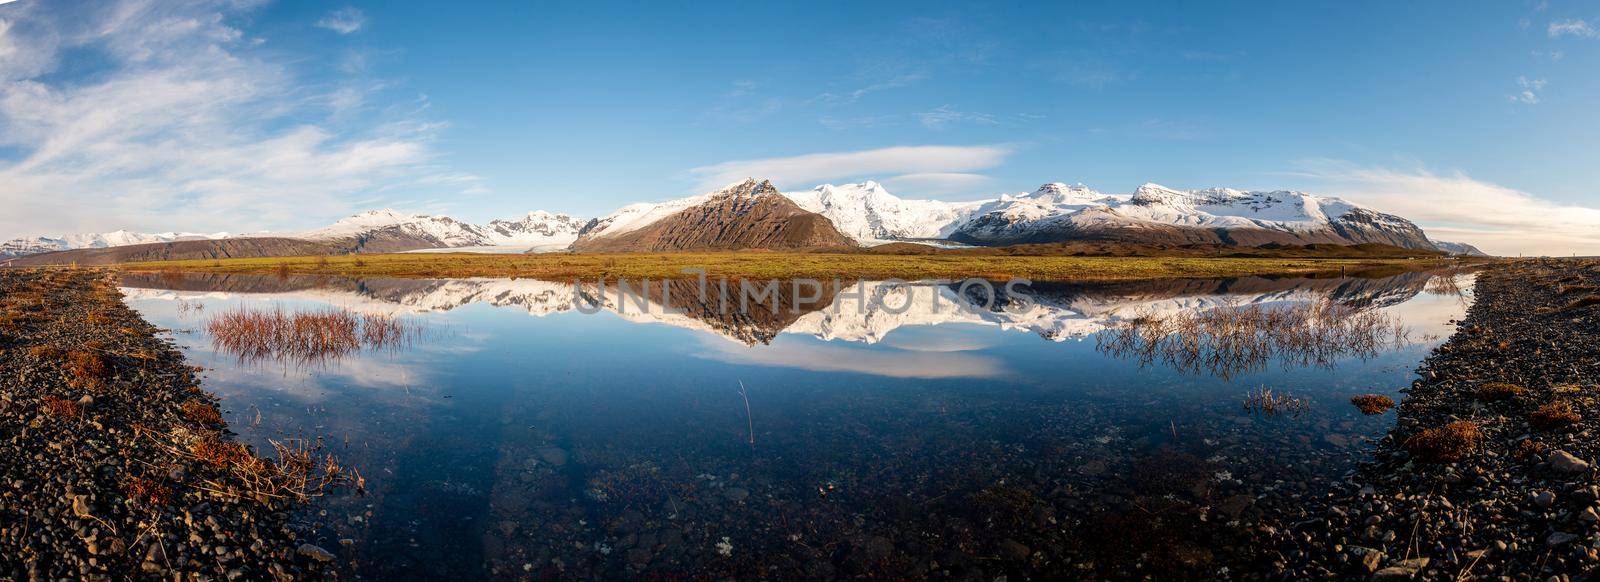 Panorama of Icelandic mountain range with beautiful snowcapped mountains by jyurinko